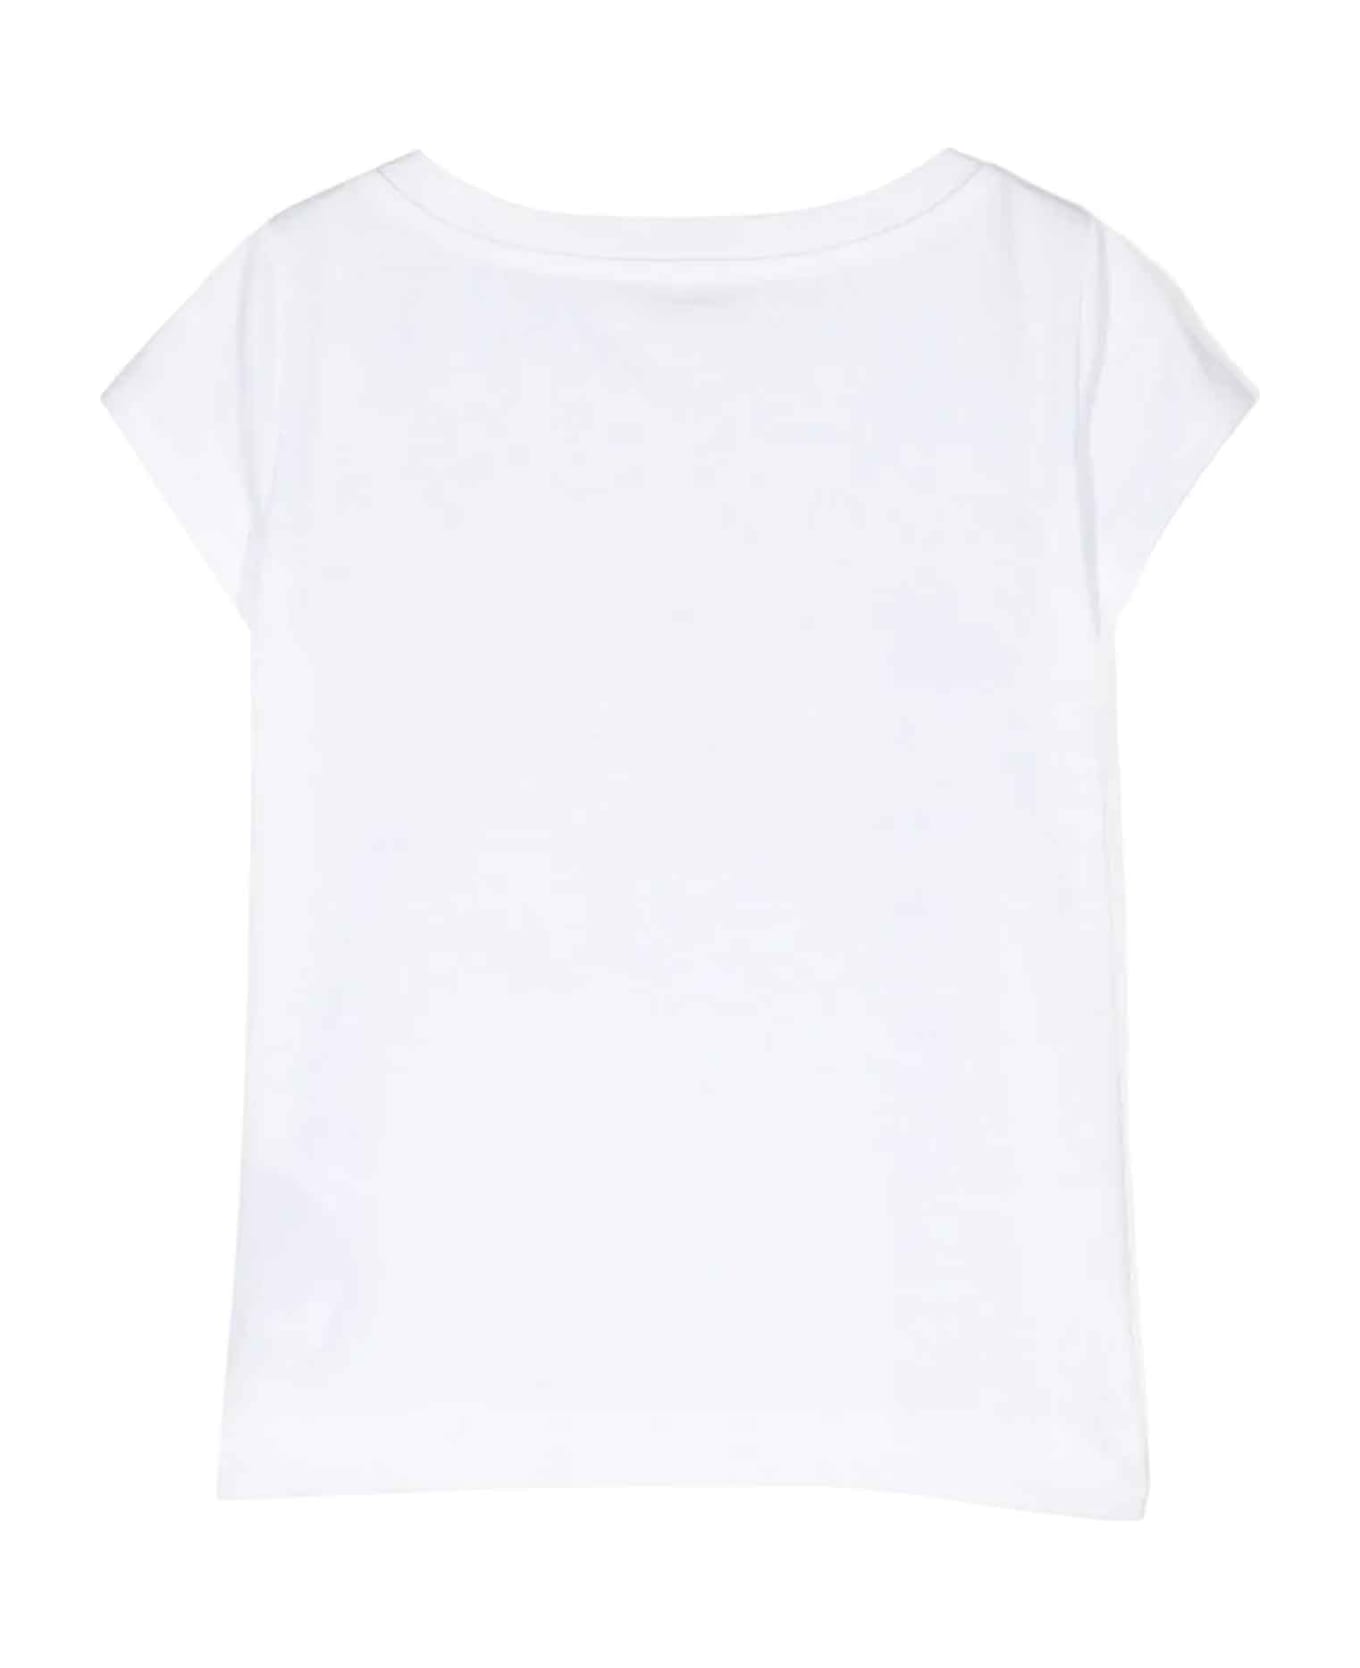 Monnalisa White T-shirt Girl